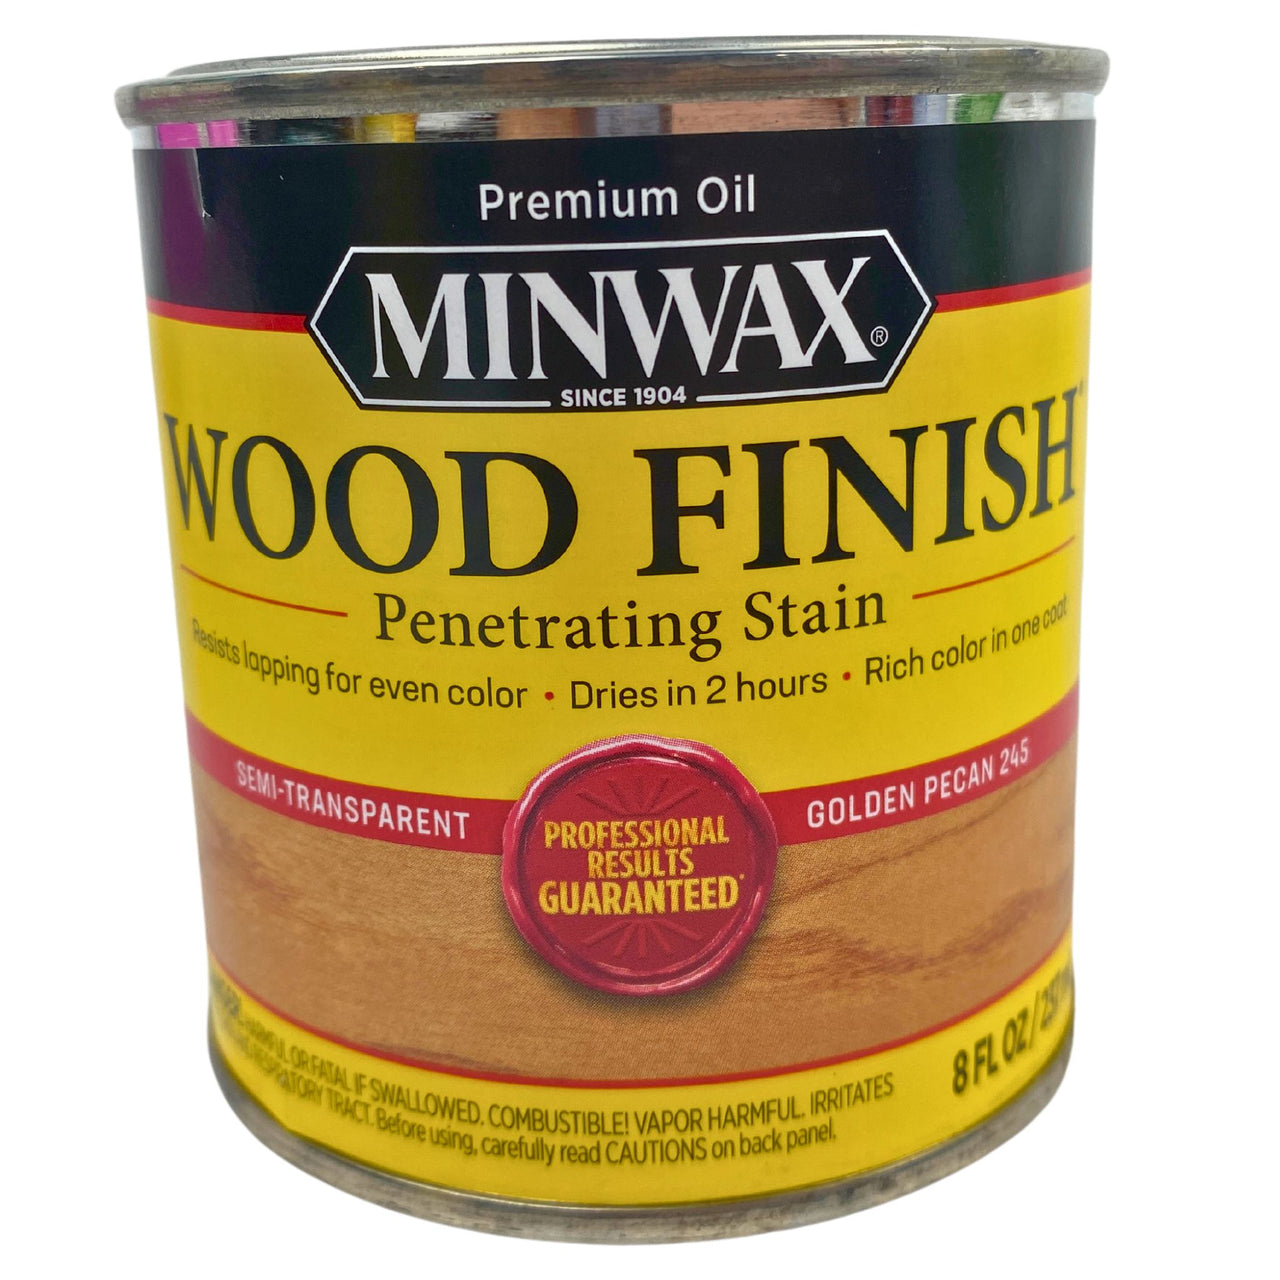 Premium Oil Minwax Wood Finish Penetrating Stain Golden Pecan